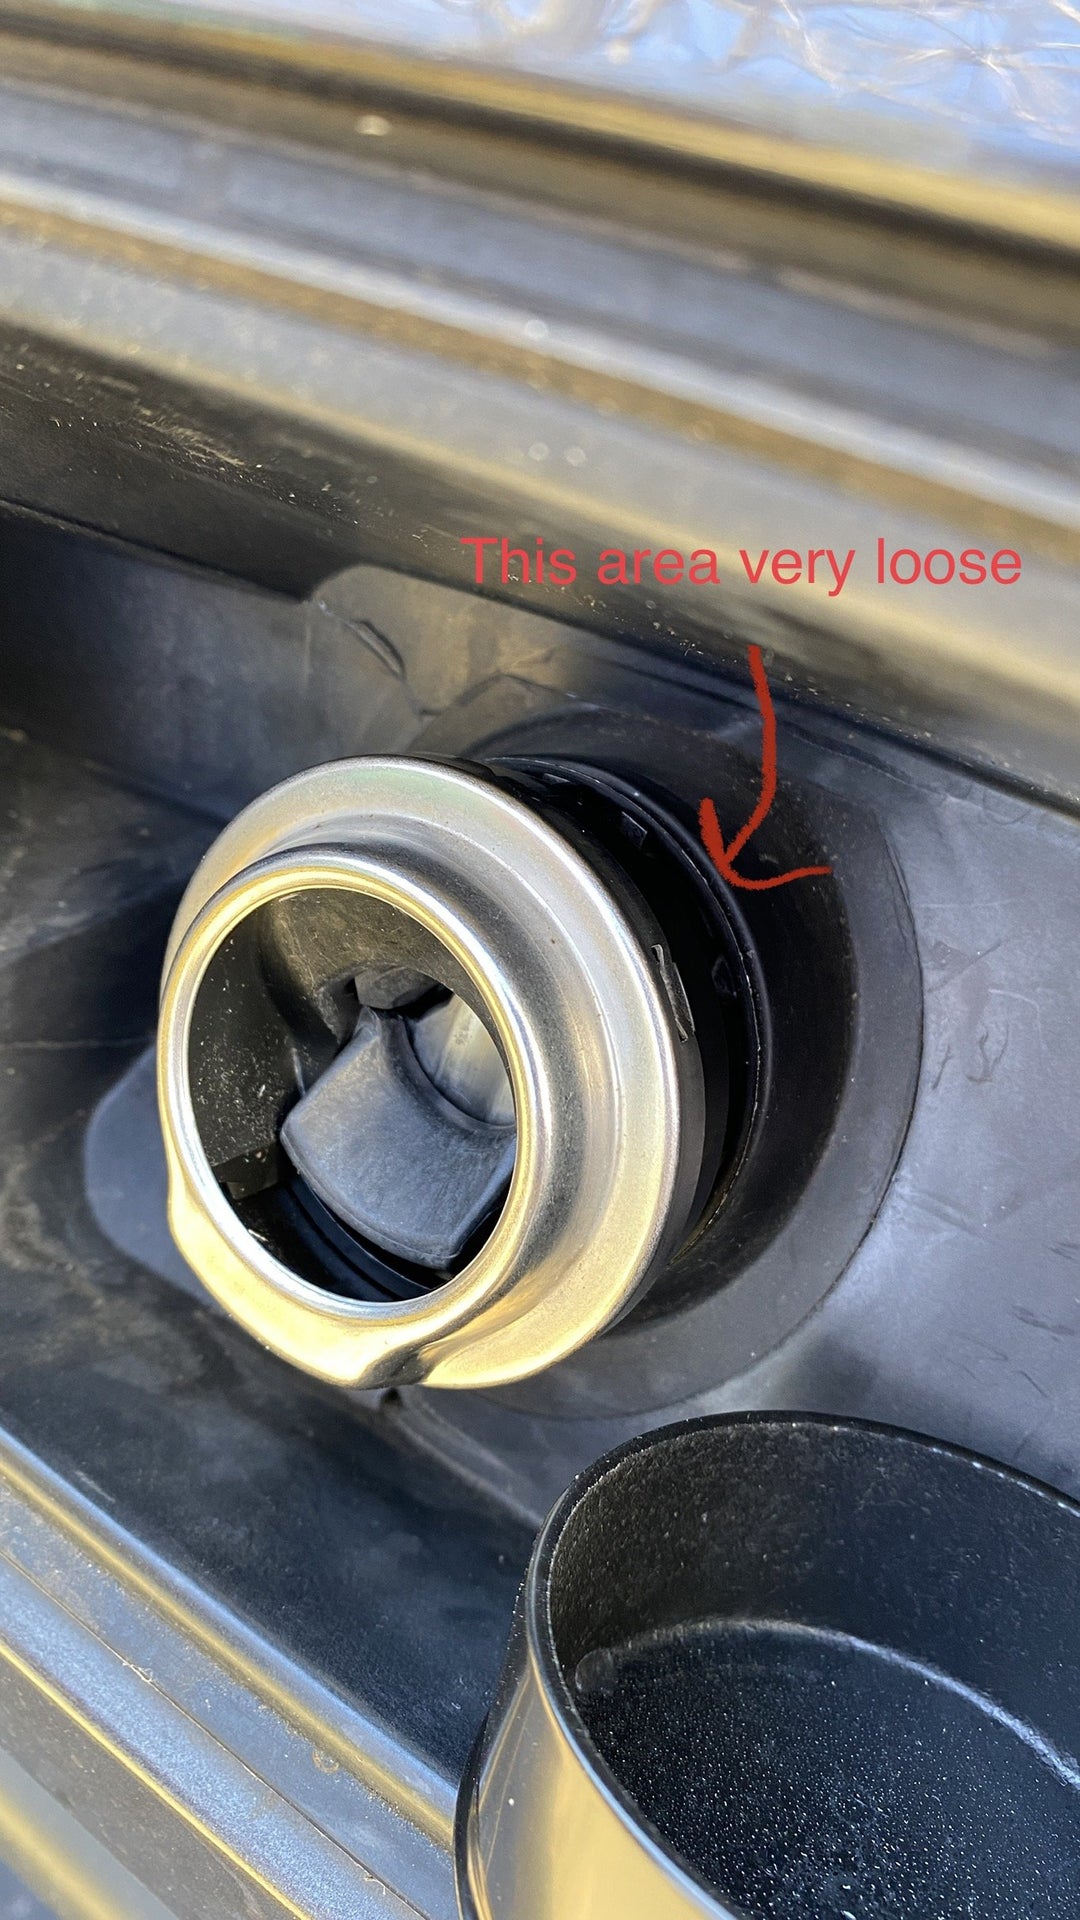 P0456 Evap Leak and Capless Fuel Fill | Jeep Garage - Jeep Forum